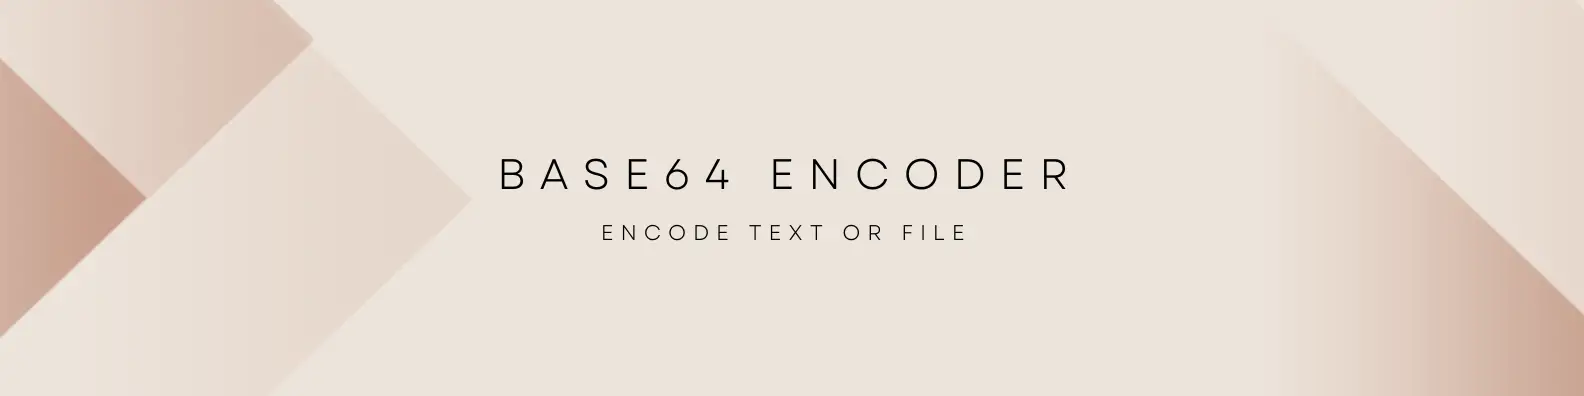 Base64 Encoder Tool Thumbnail